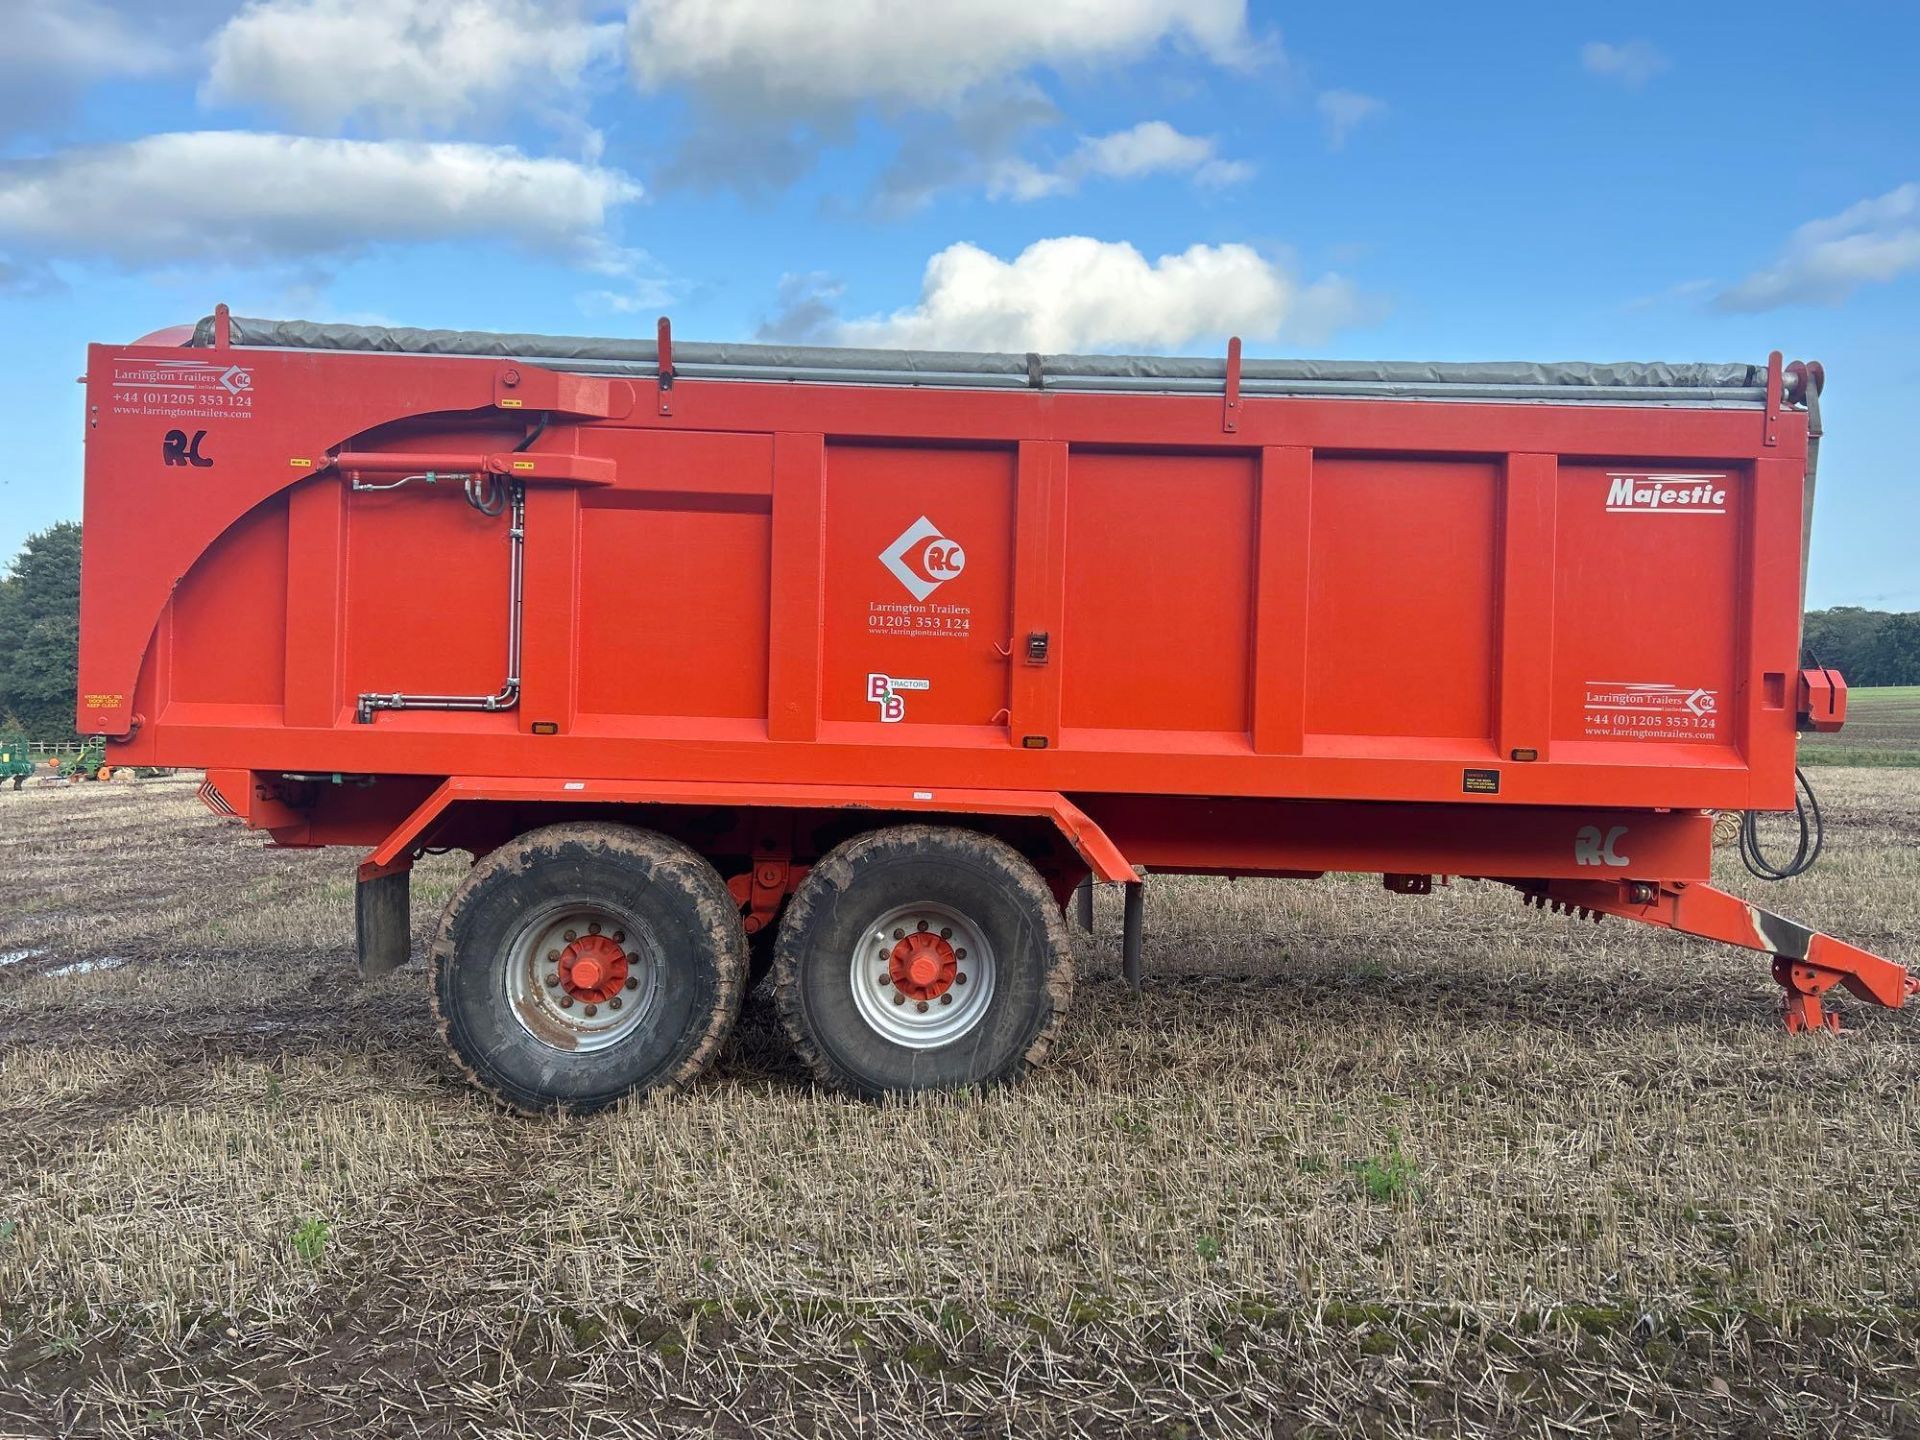 2014 Larrington Majestic 18t twin axle grain trailer, sprung drawbar, air brakes, hydraulic tailgate - Image 4 of 11